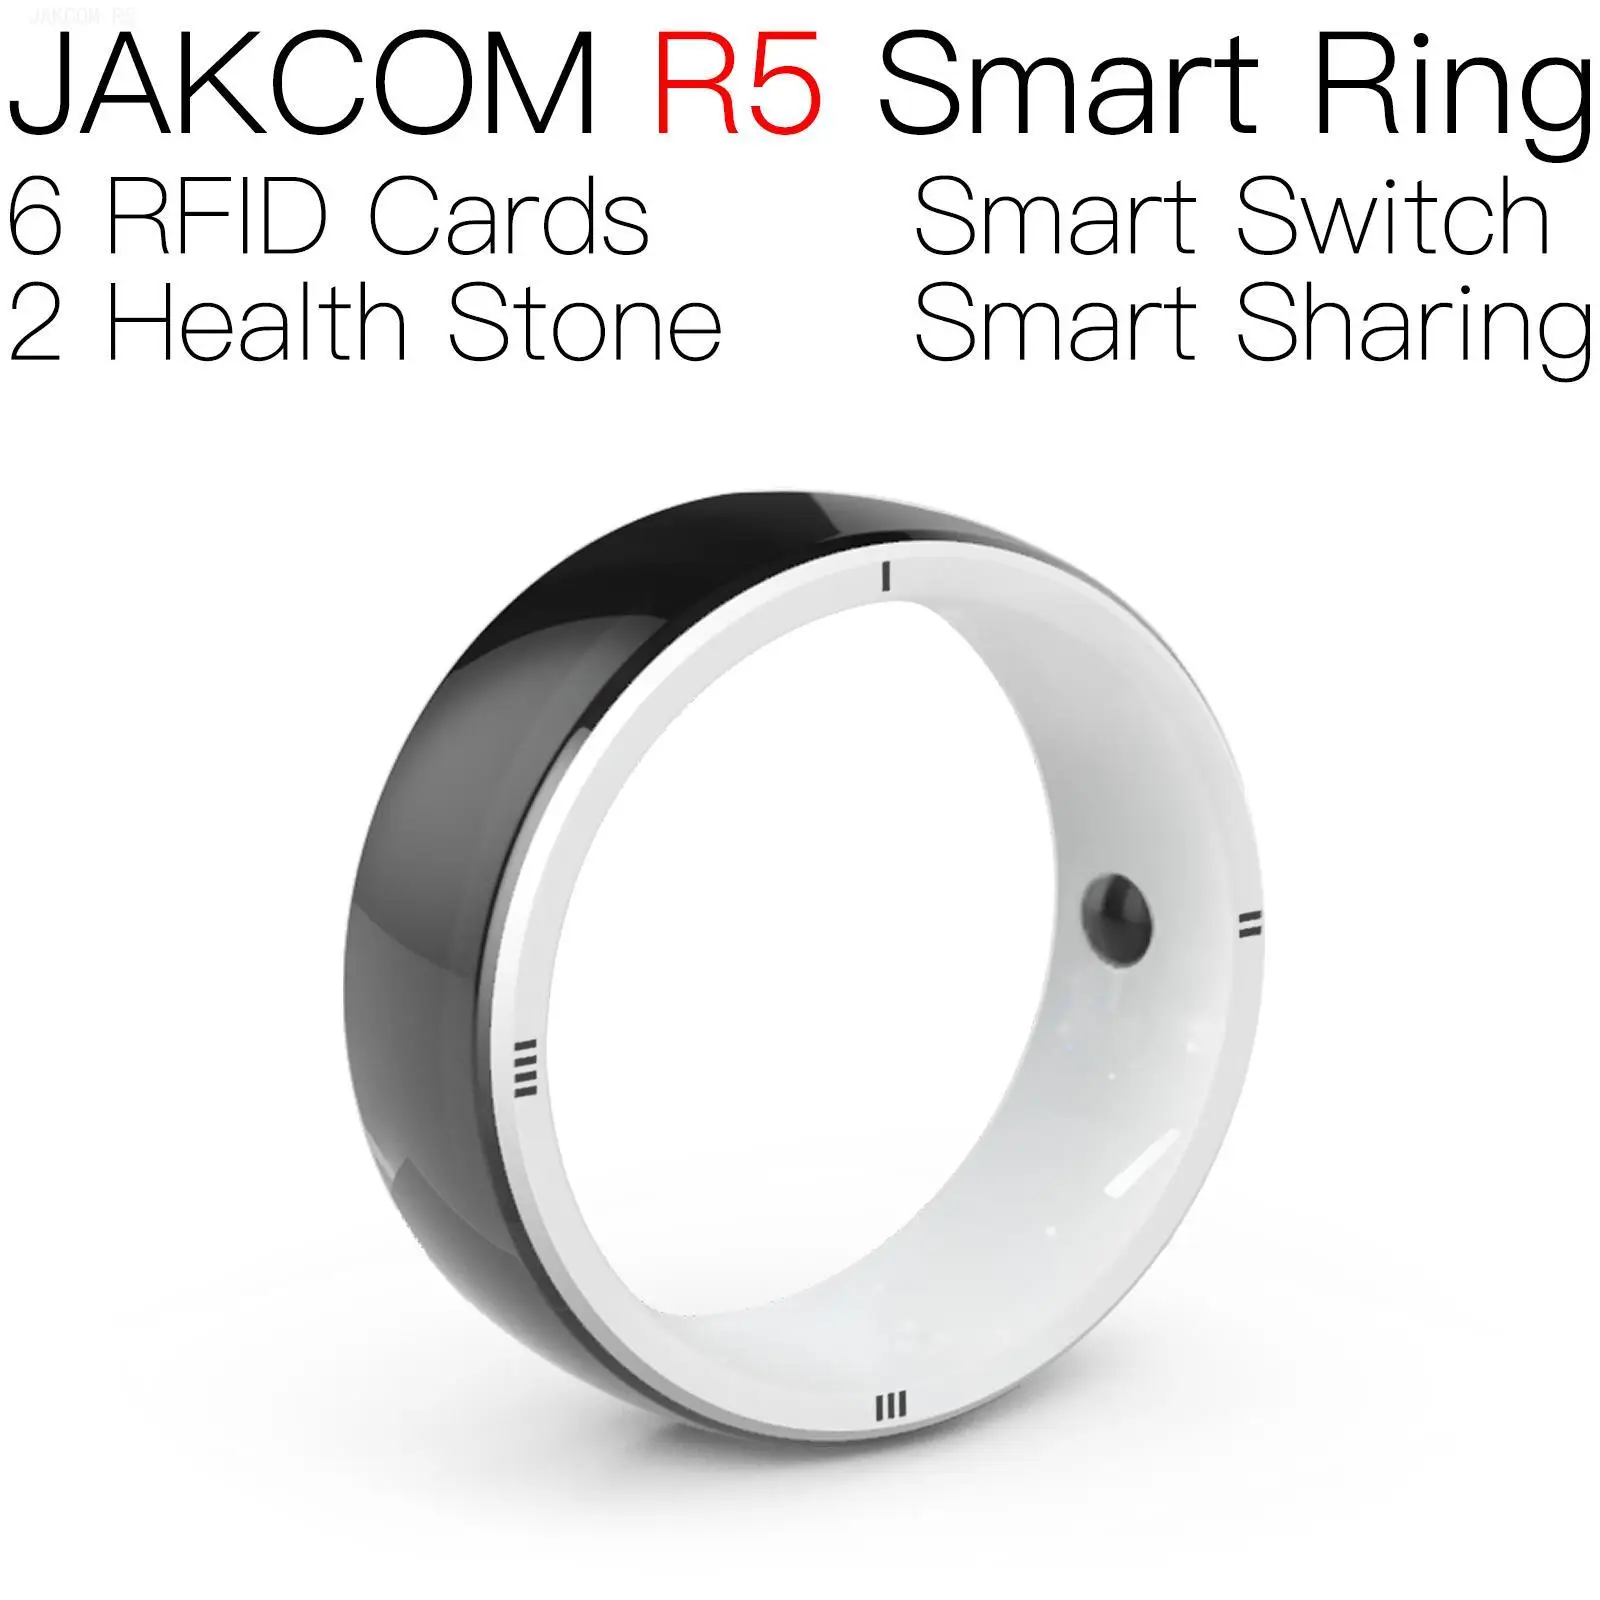 

JAKCOM R5 Smart Ring better than animal crosing cards chip for crossing kosulka new horizons diy rfid tag uhf antena dividing